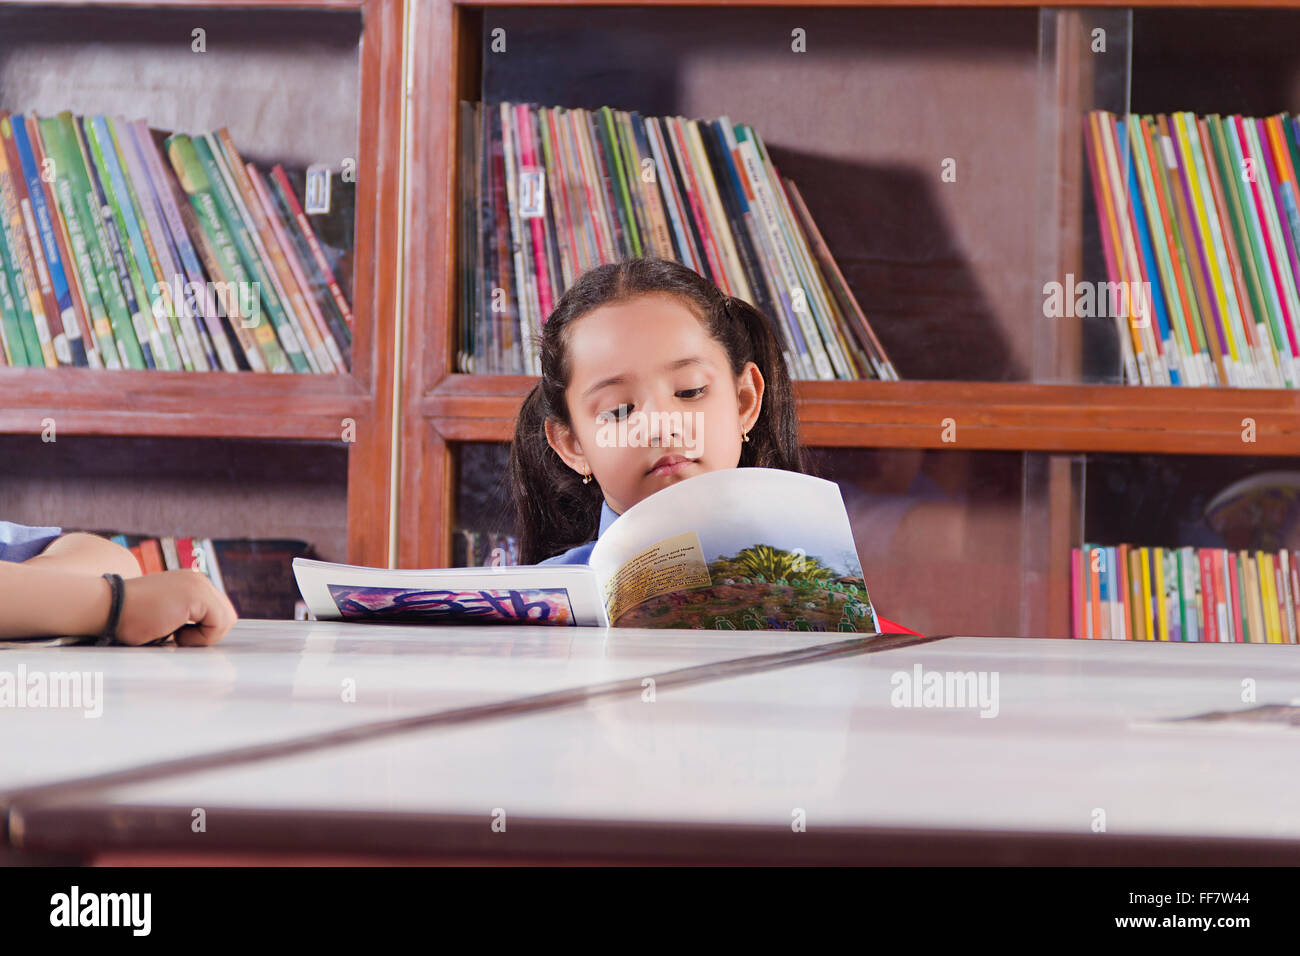 Asien Asien Asiaten Kleidung Buch Regal Regale Bücherregale Klassenzimmer Szene Beziehungen selbst versichert Selbstvertrauen selbst Stockfoto